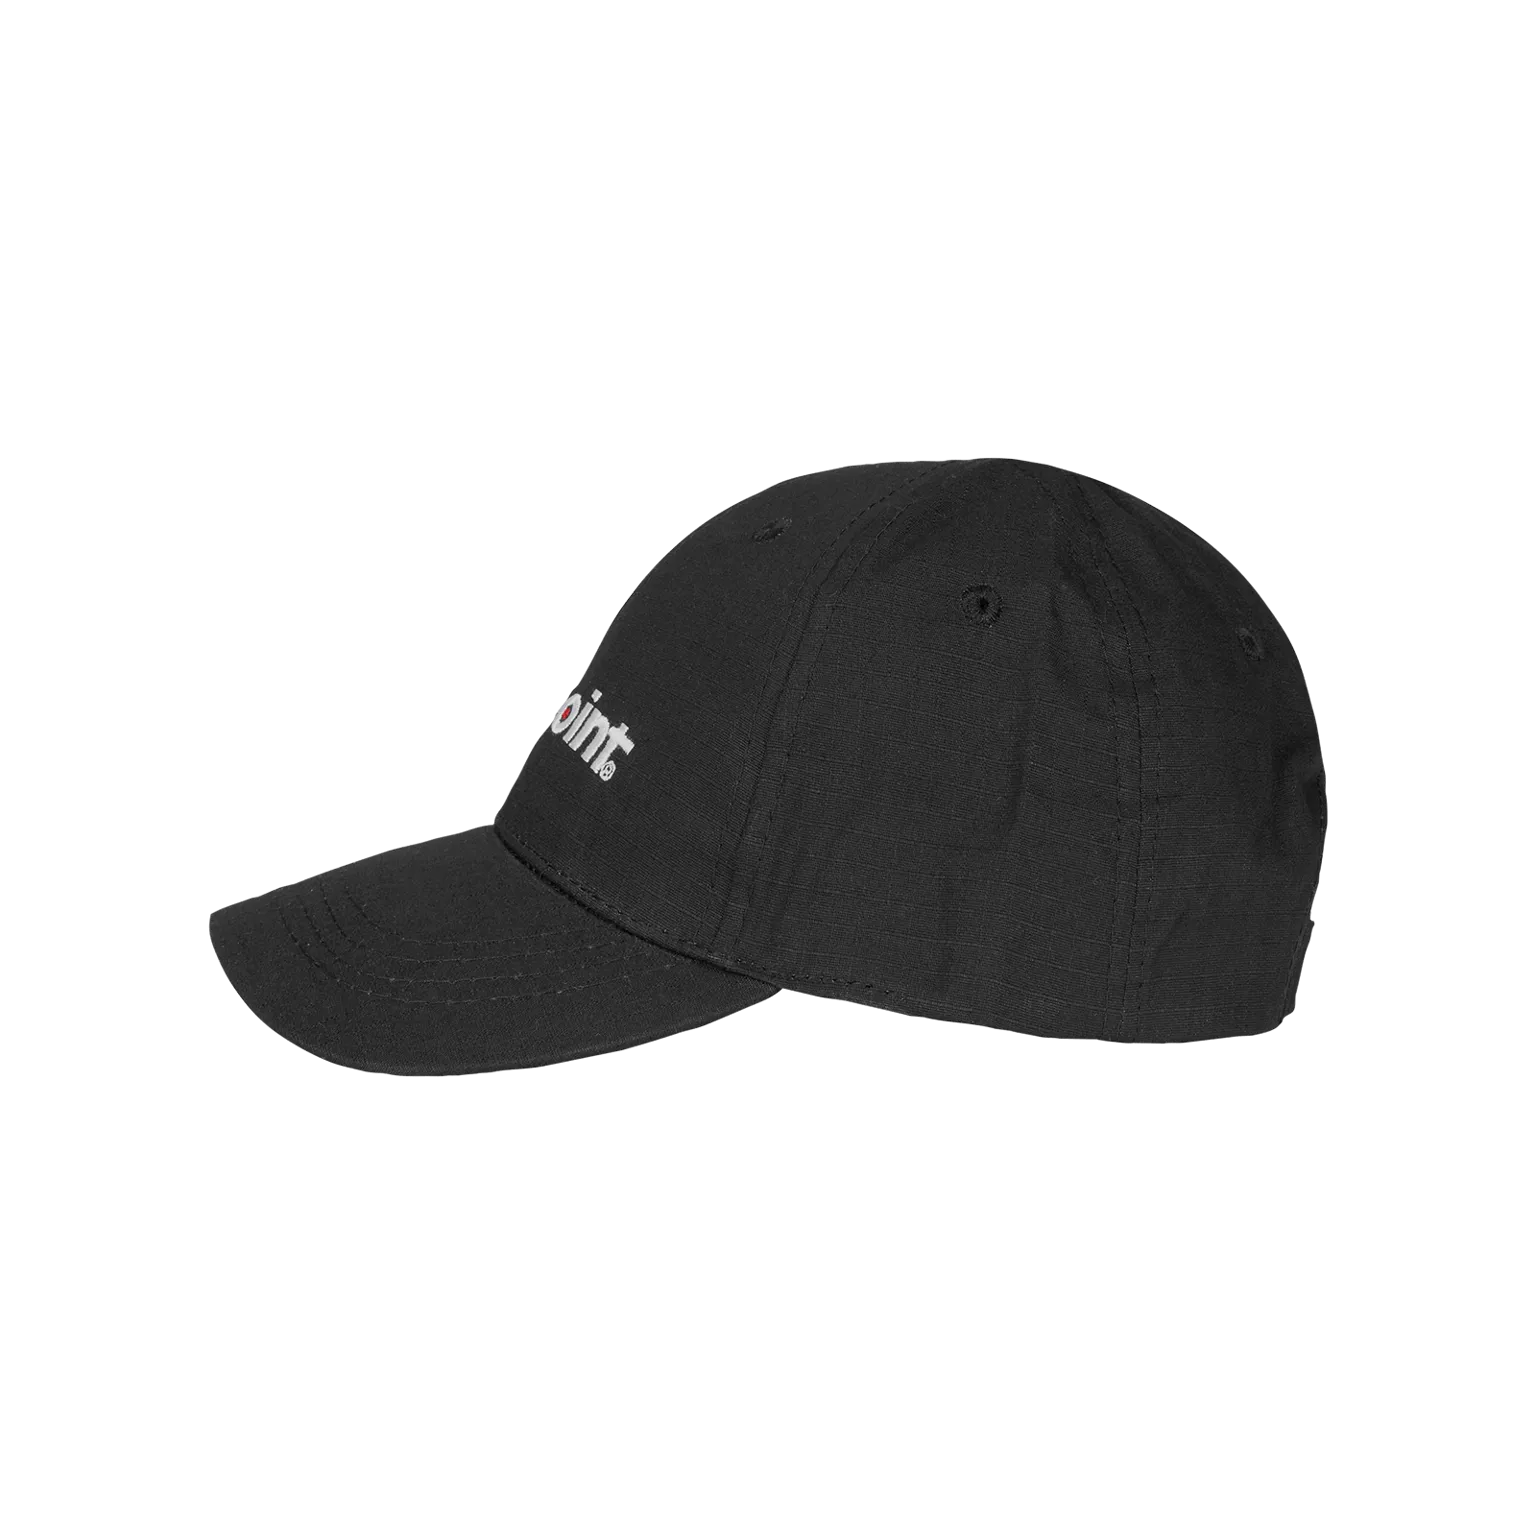 Aimpoint® Cap - Black Light weight cap  - 4